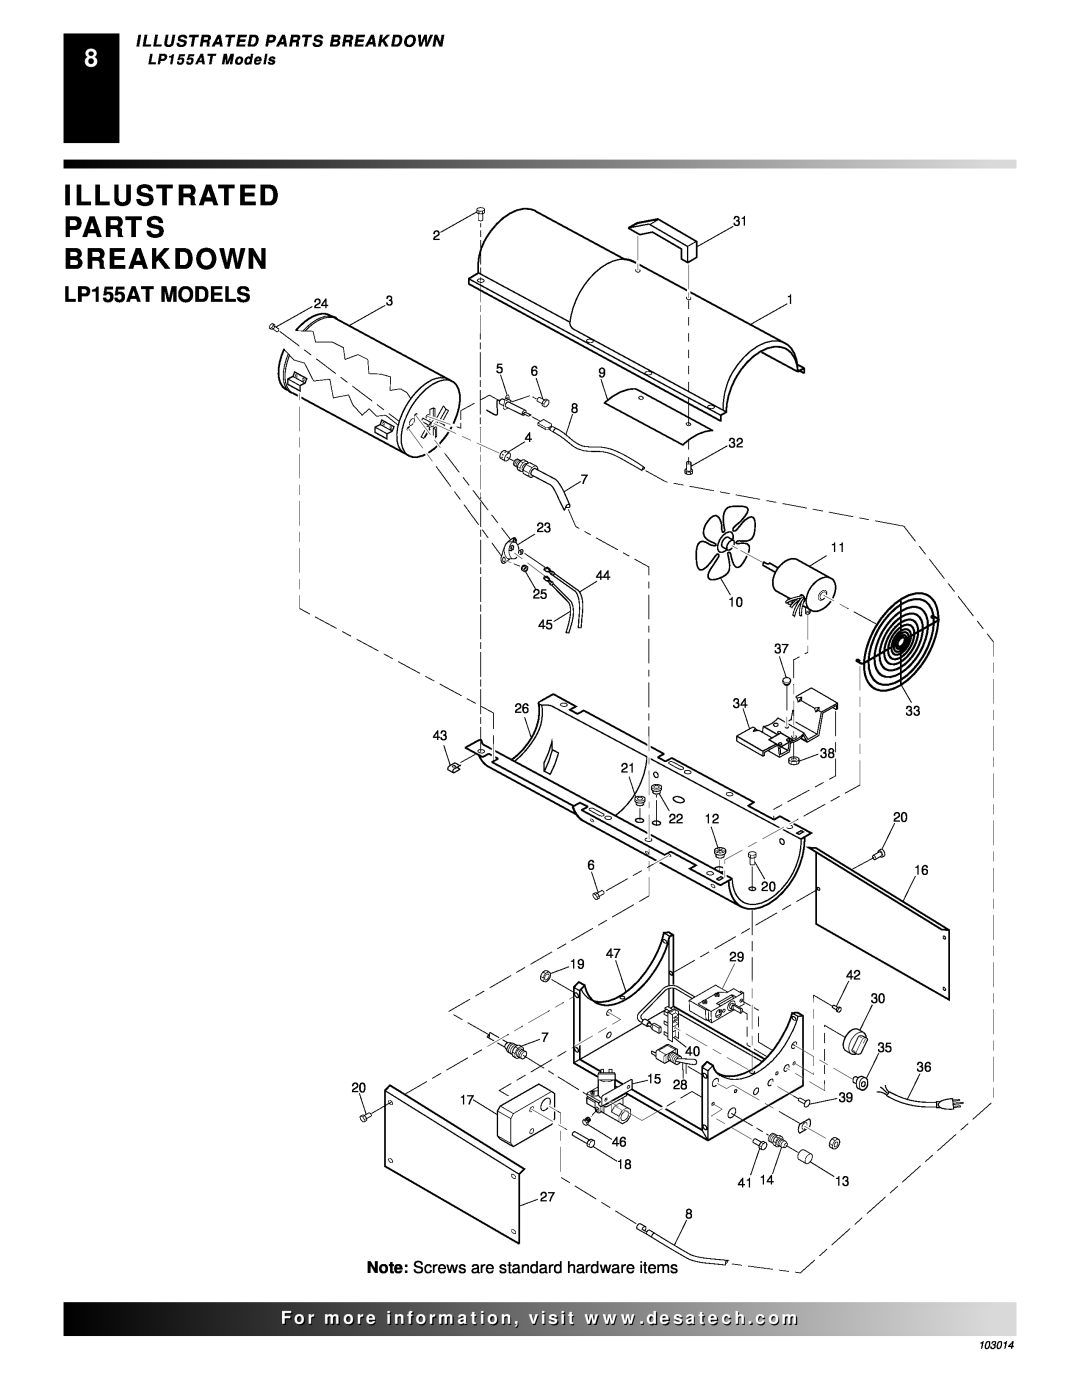 Desa owner manual Illustrated Parts Breakdown, LP155AT Models 